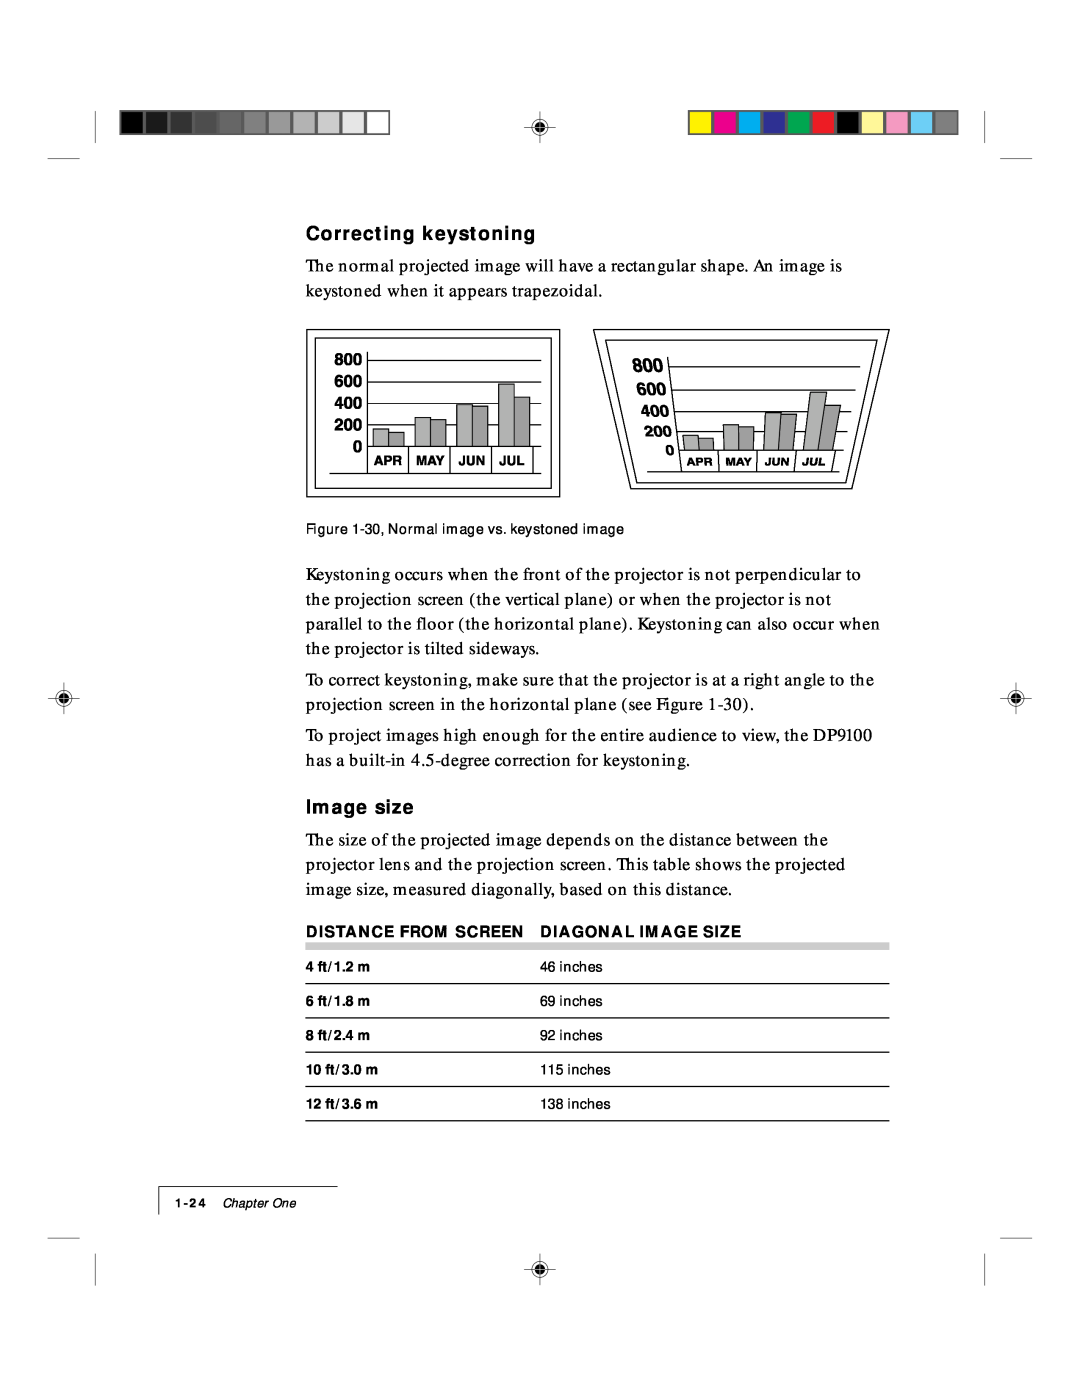 Ask Proxima 9100 manual Correcting keystoning, Image size, Distance From Screen Diagonal Image Size 